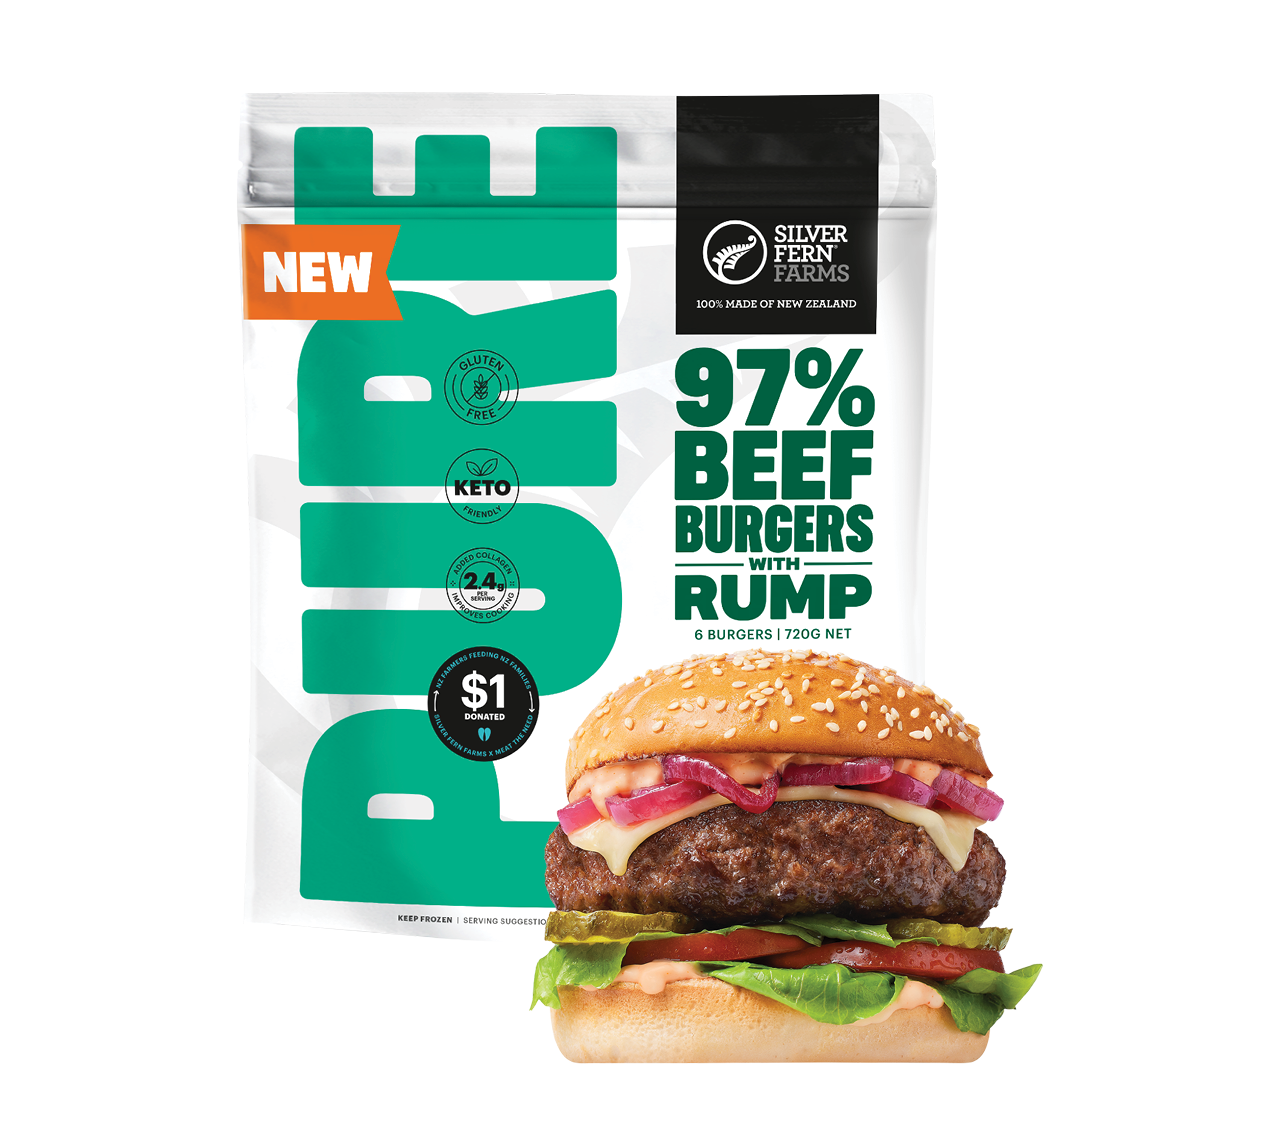 Beef Short Rib Burger Packaging